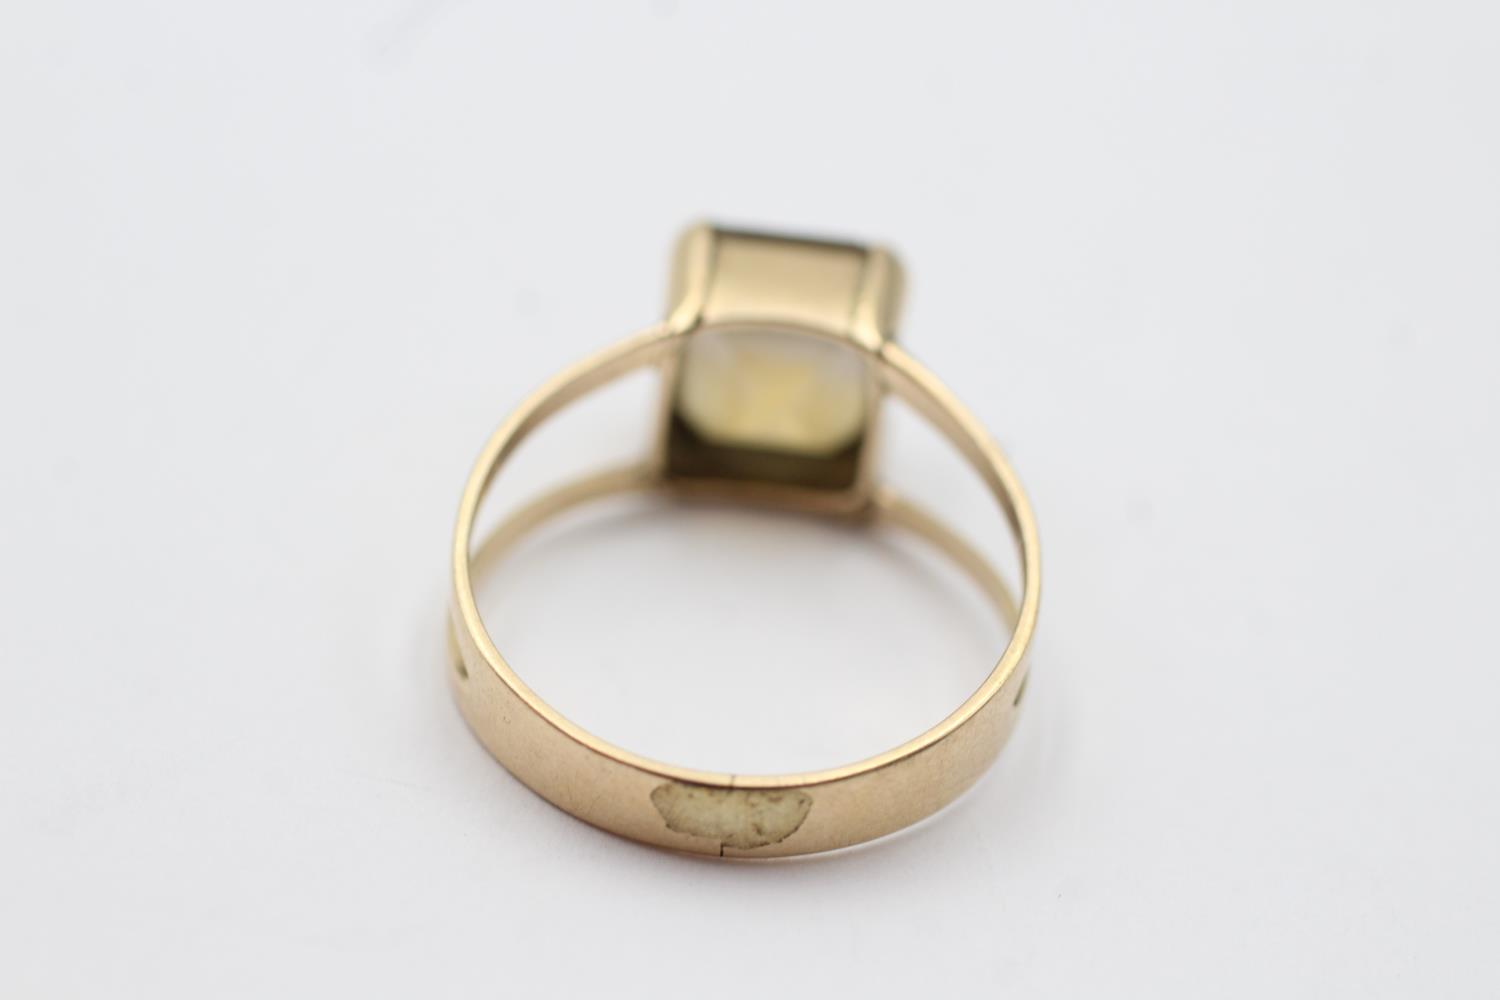 9ct gold princess cut smokey quartz solitaire ring (2.5g) size O - Image 4 of 6